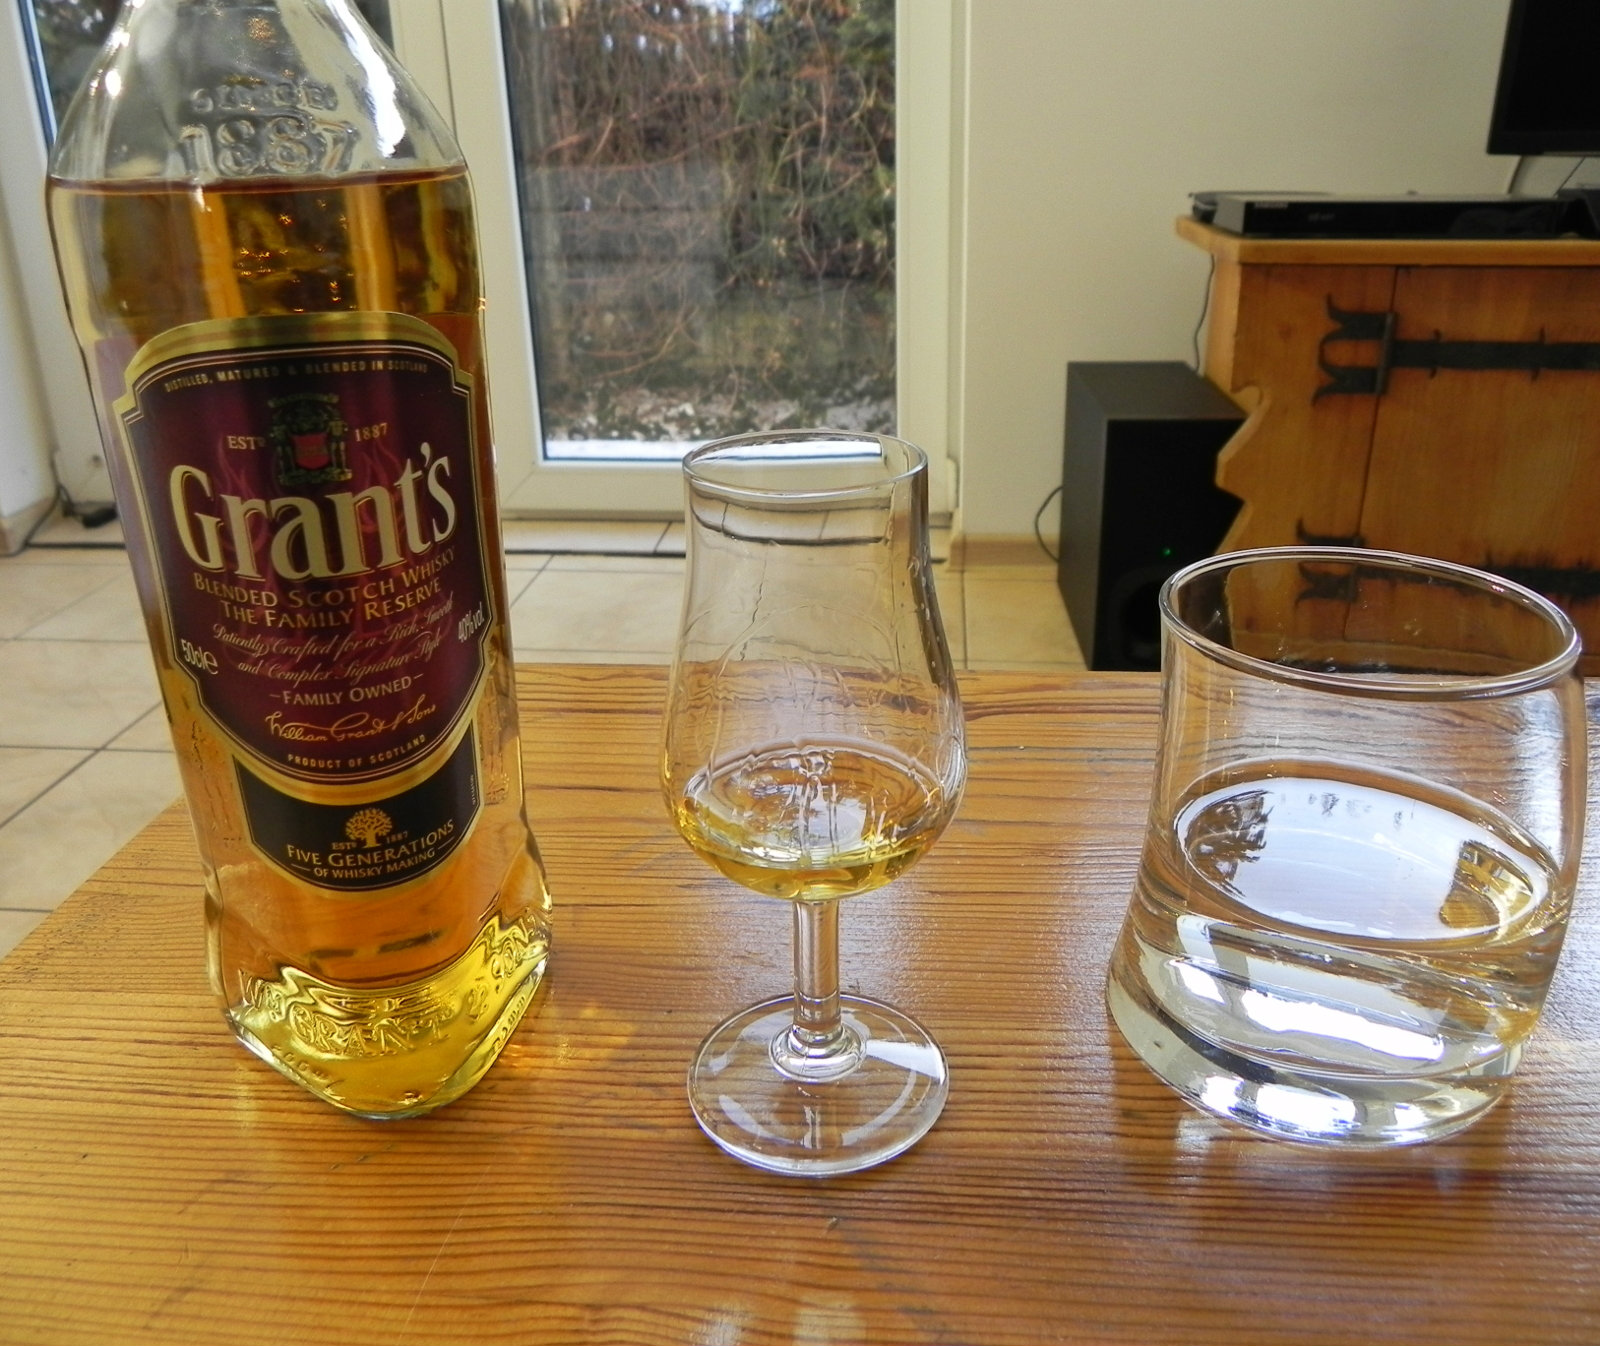 Grant's Family Reserve blended scotch whisky